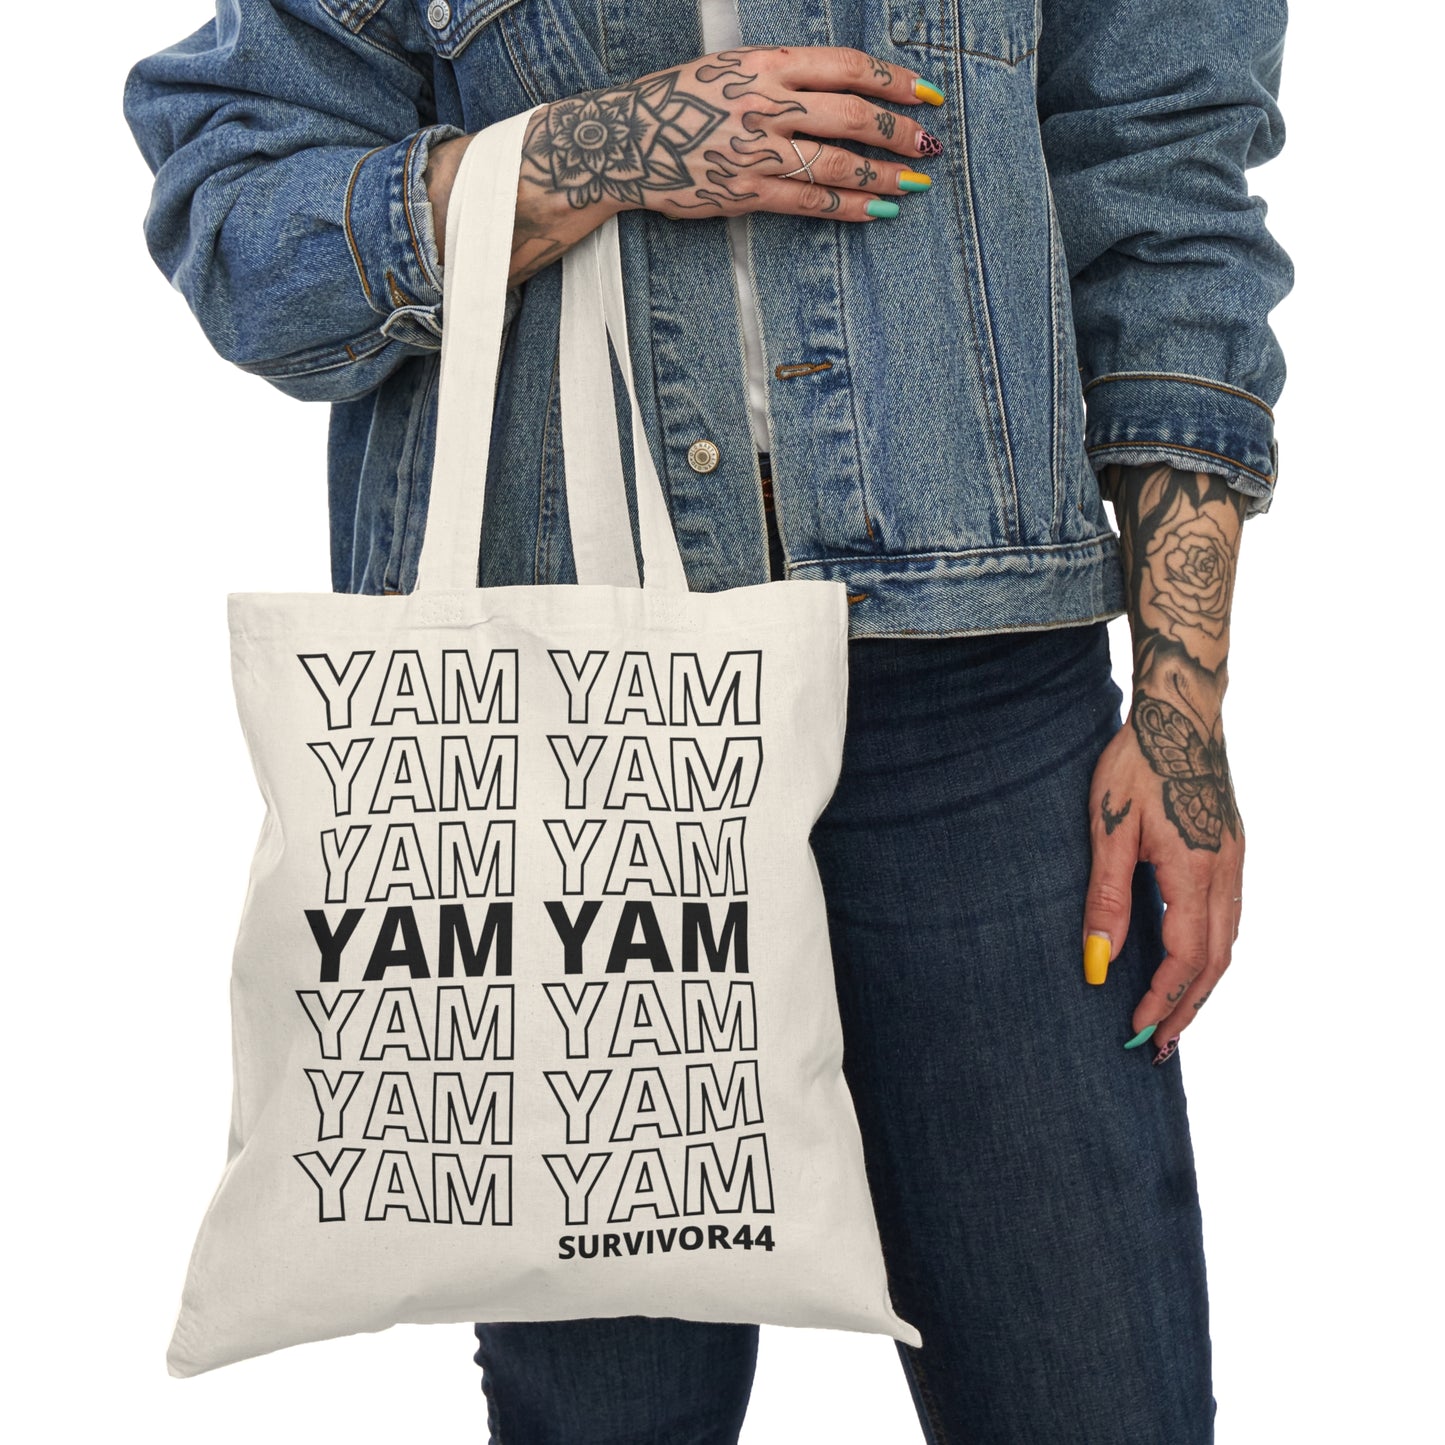 Yam Yam Thank You - Natural Canvas Tote